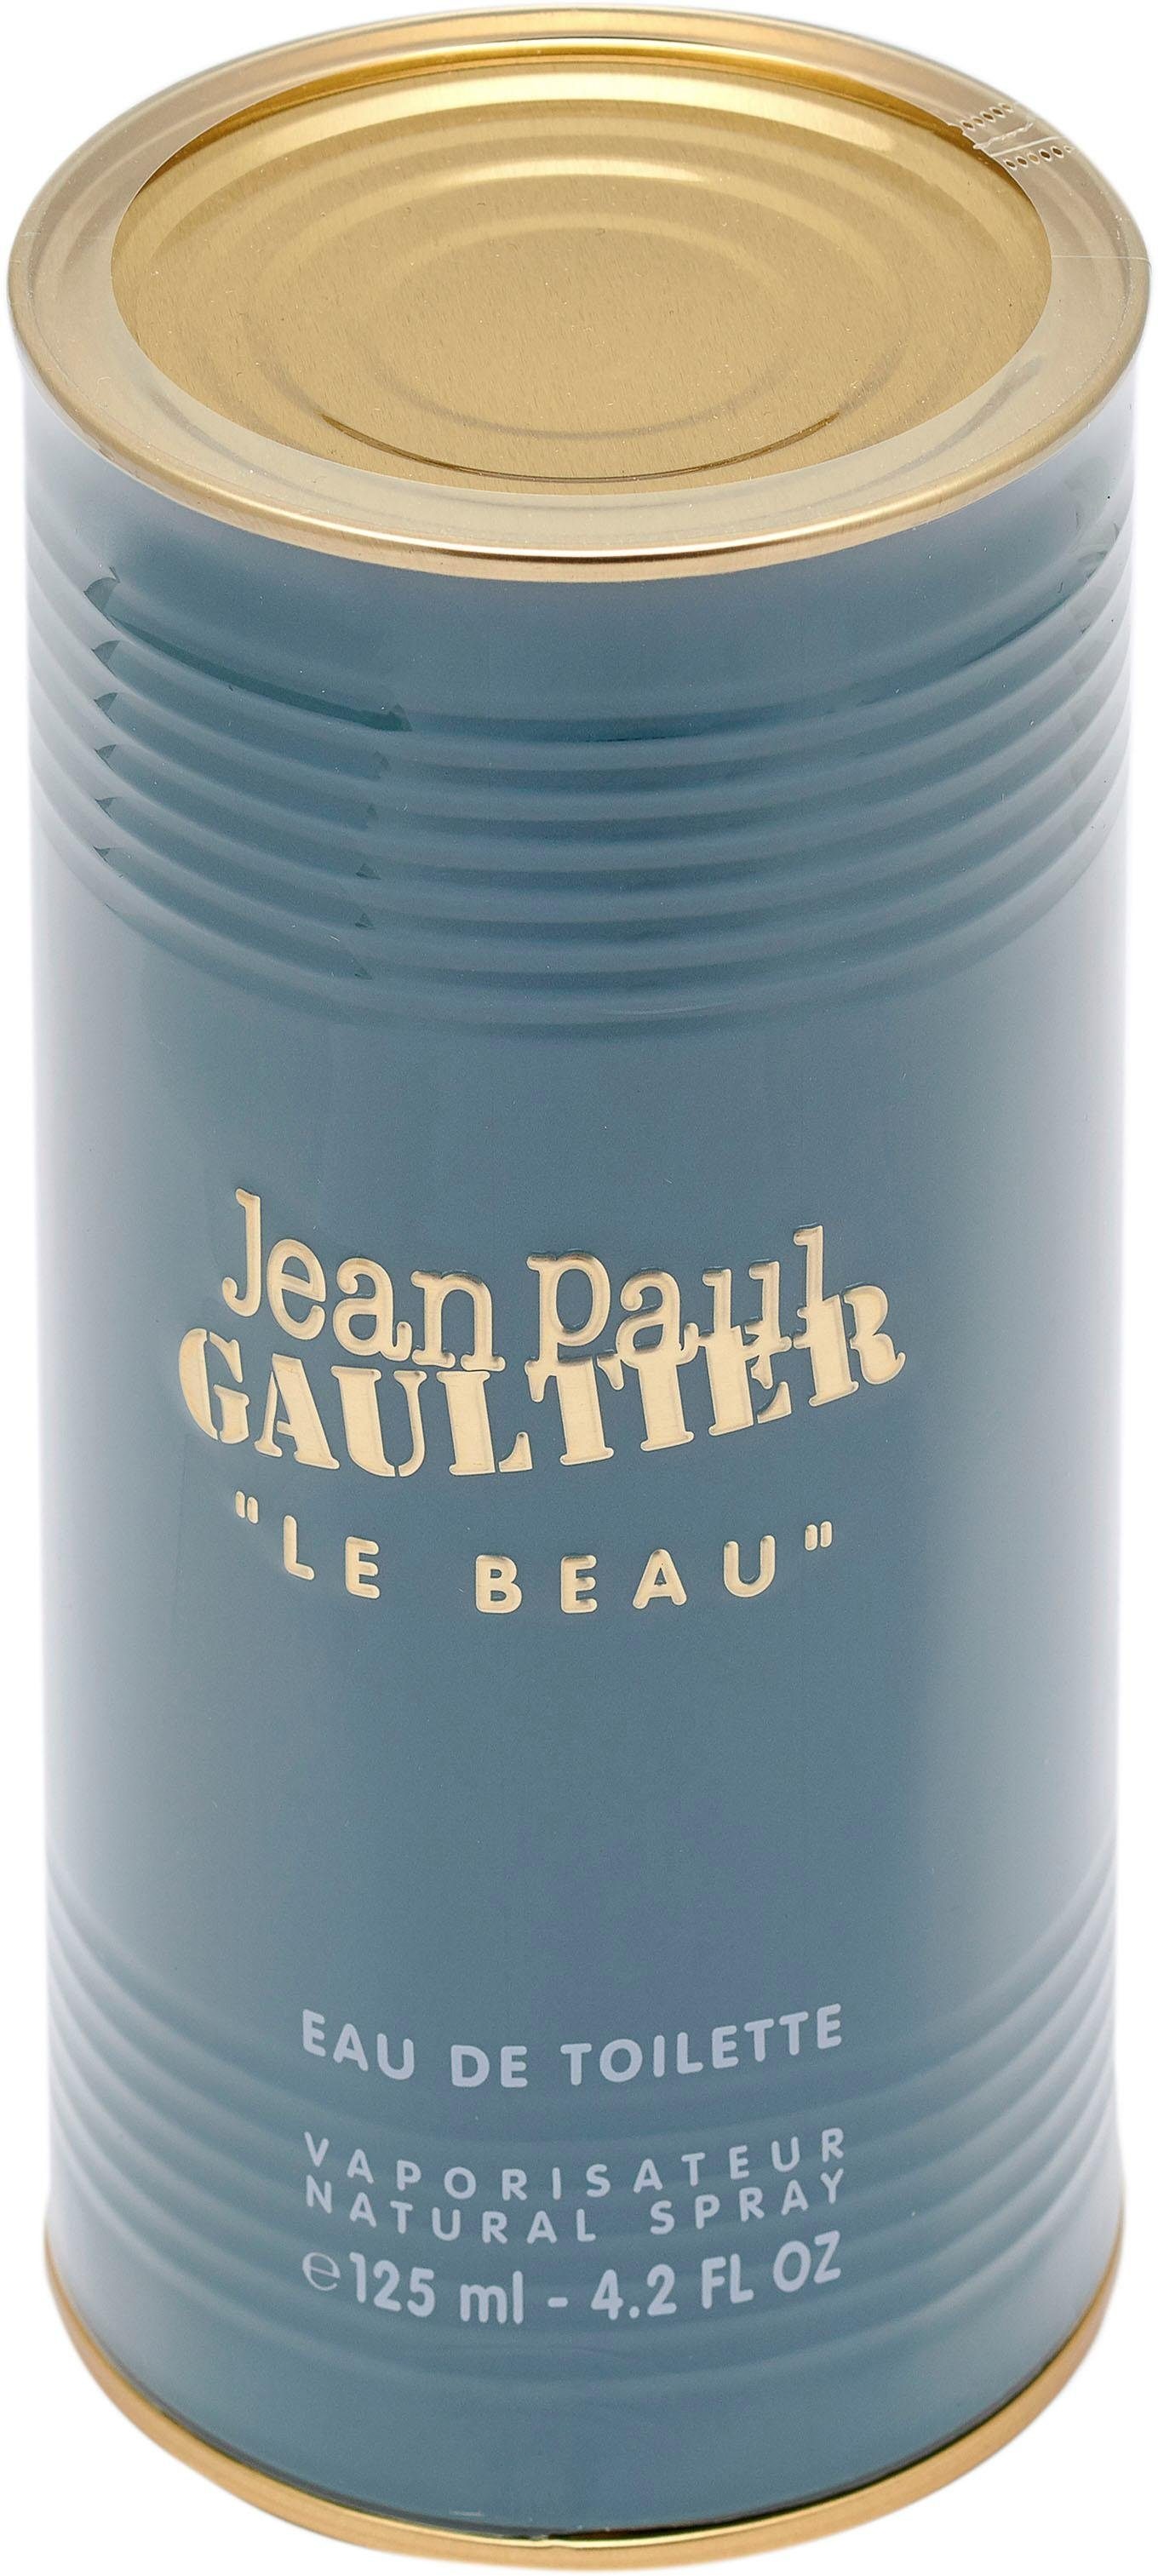 Jean Paul Gaultier Le Beau Eau de Toilette Spray 4.2 oz